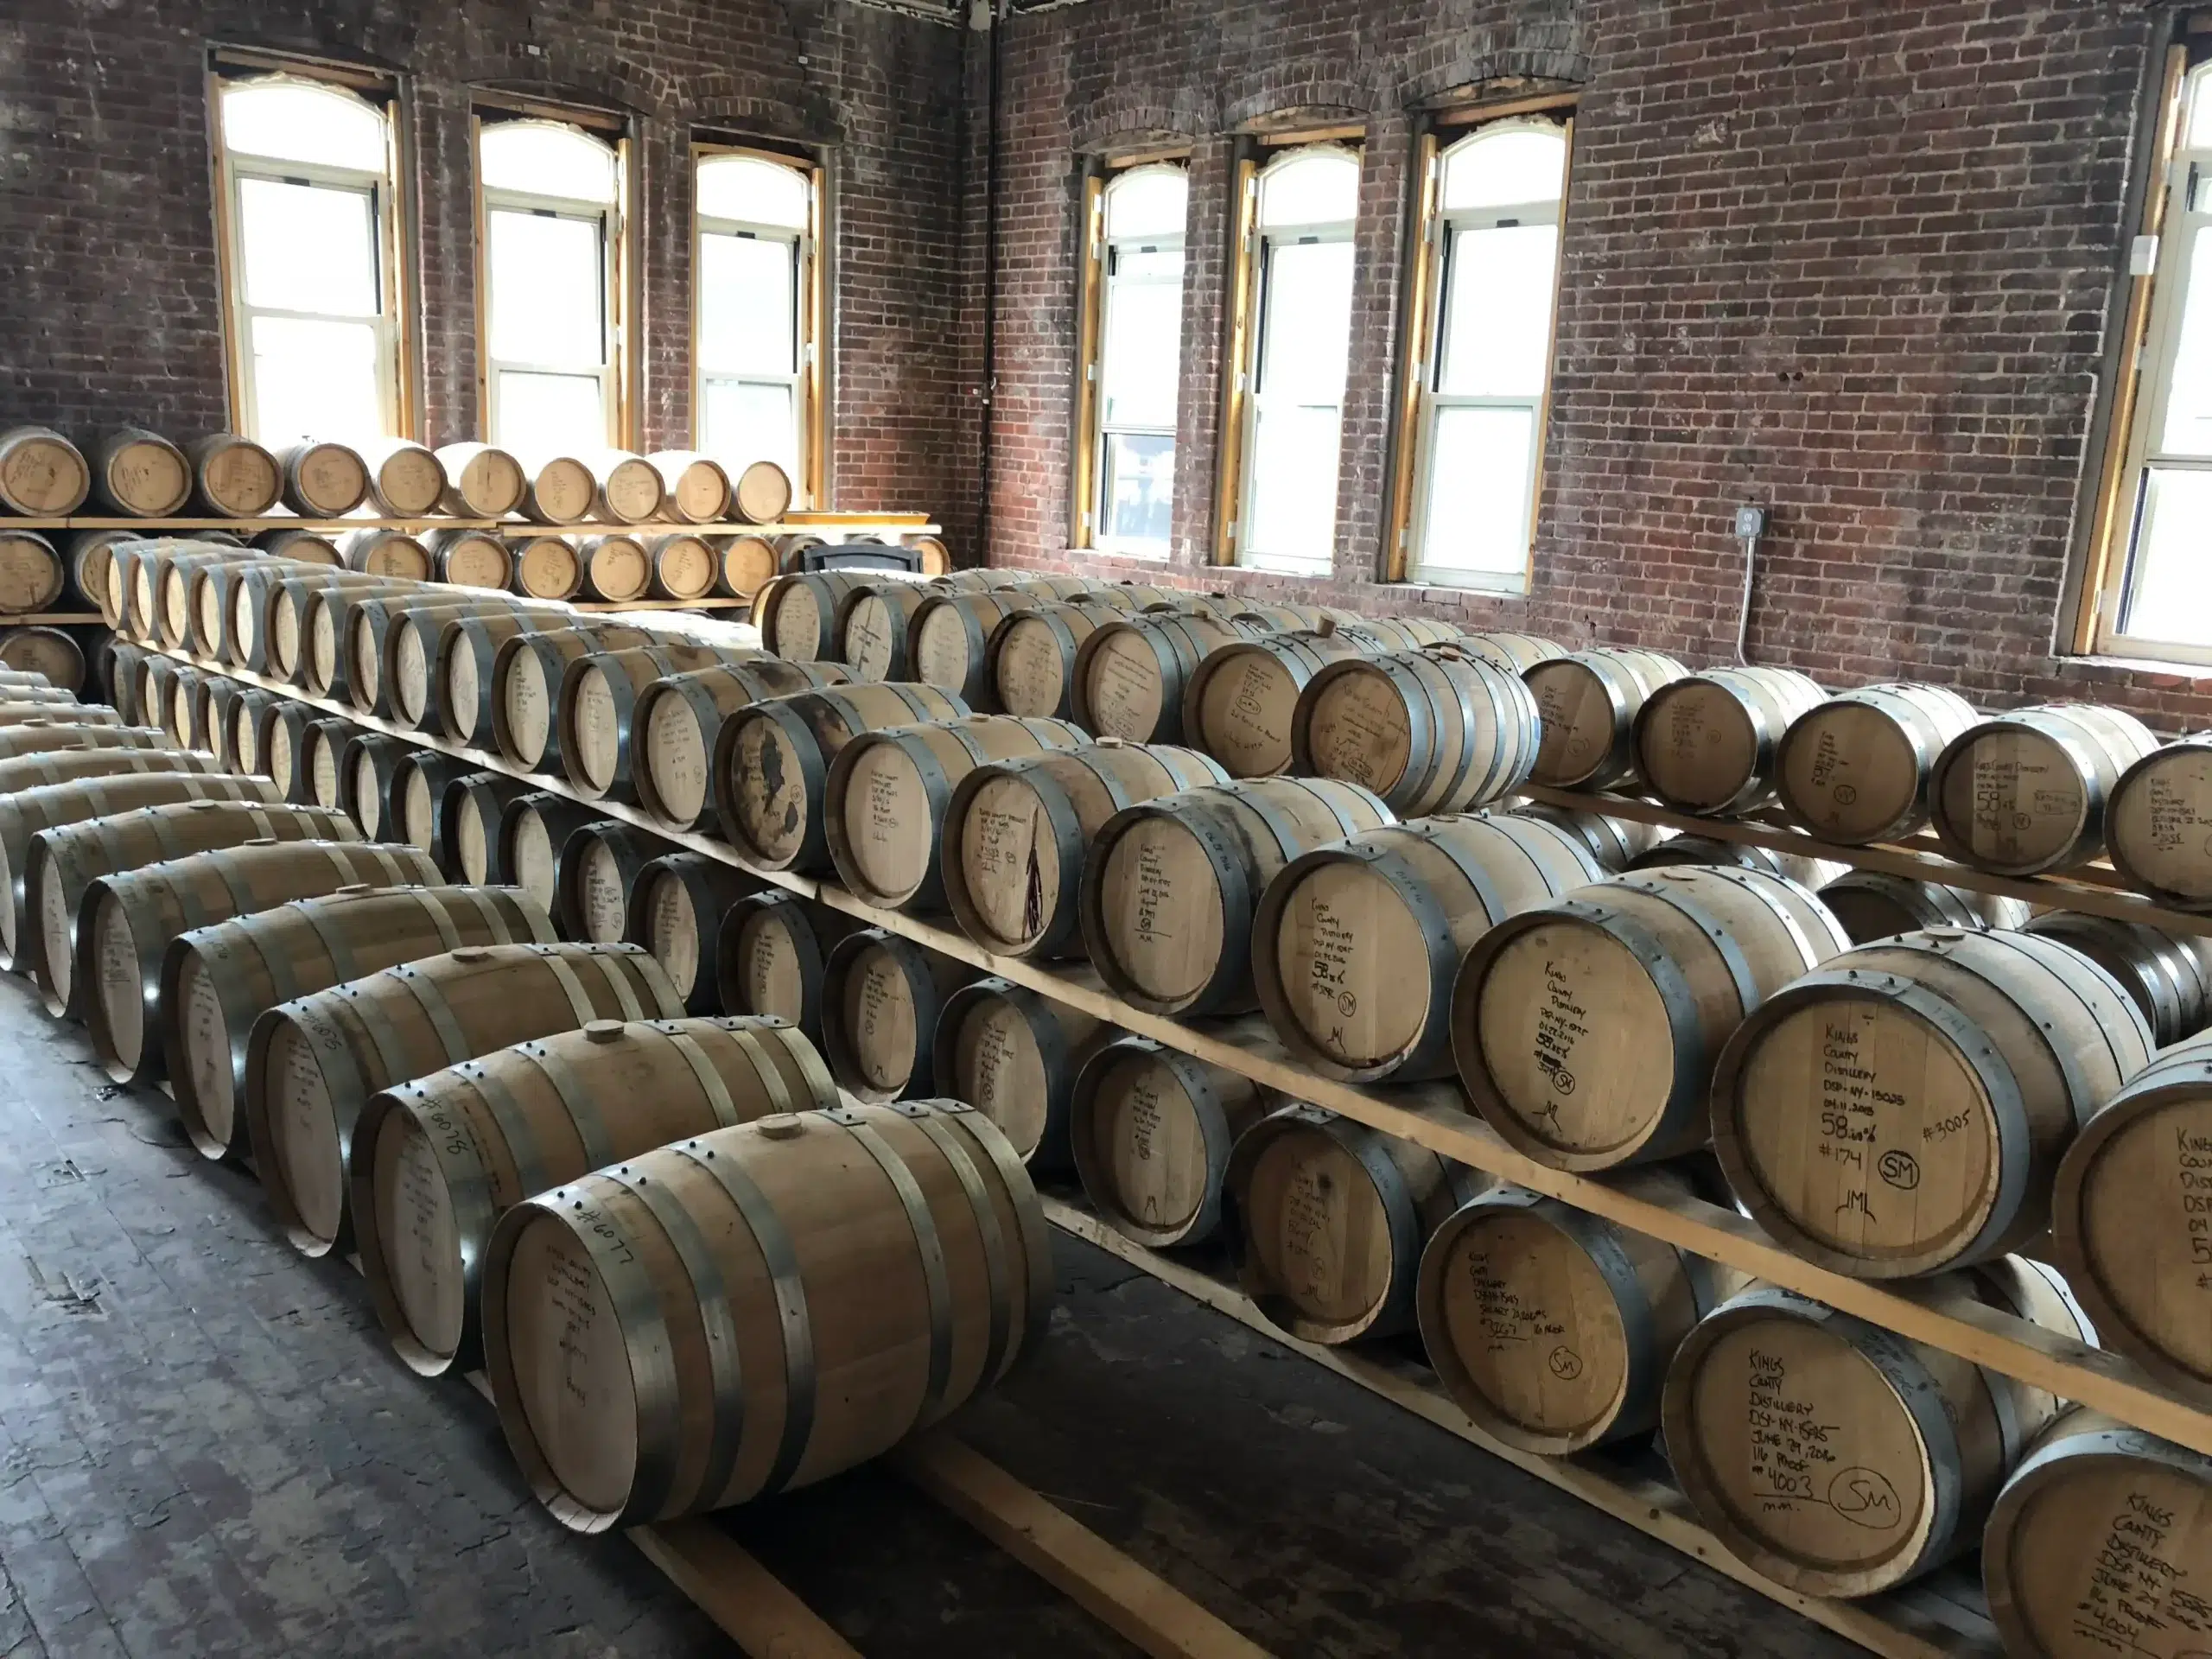 Whiskey barrels aging in a distillery warehouse.